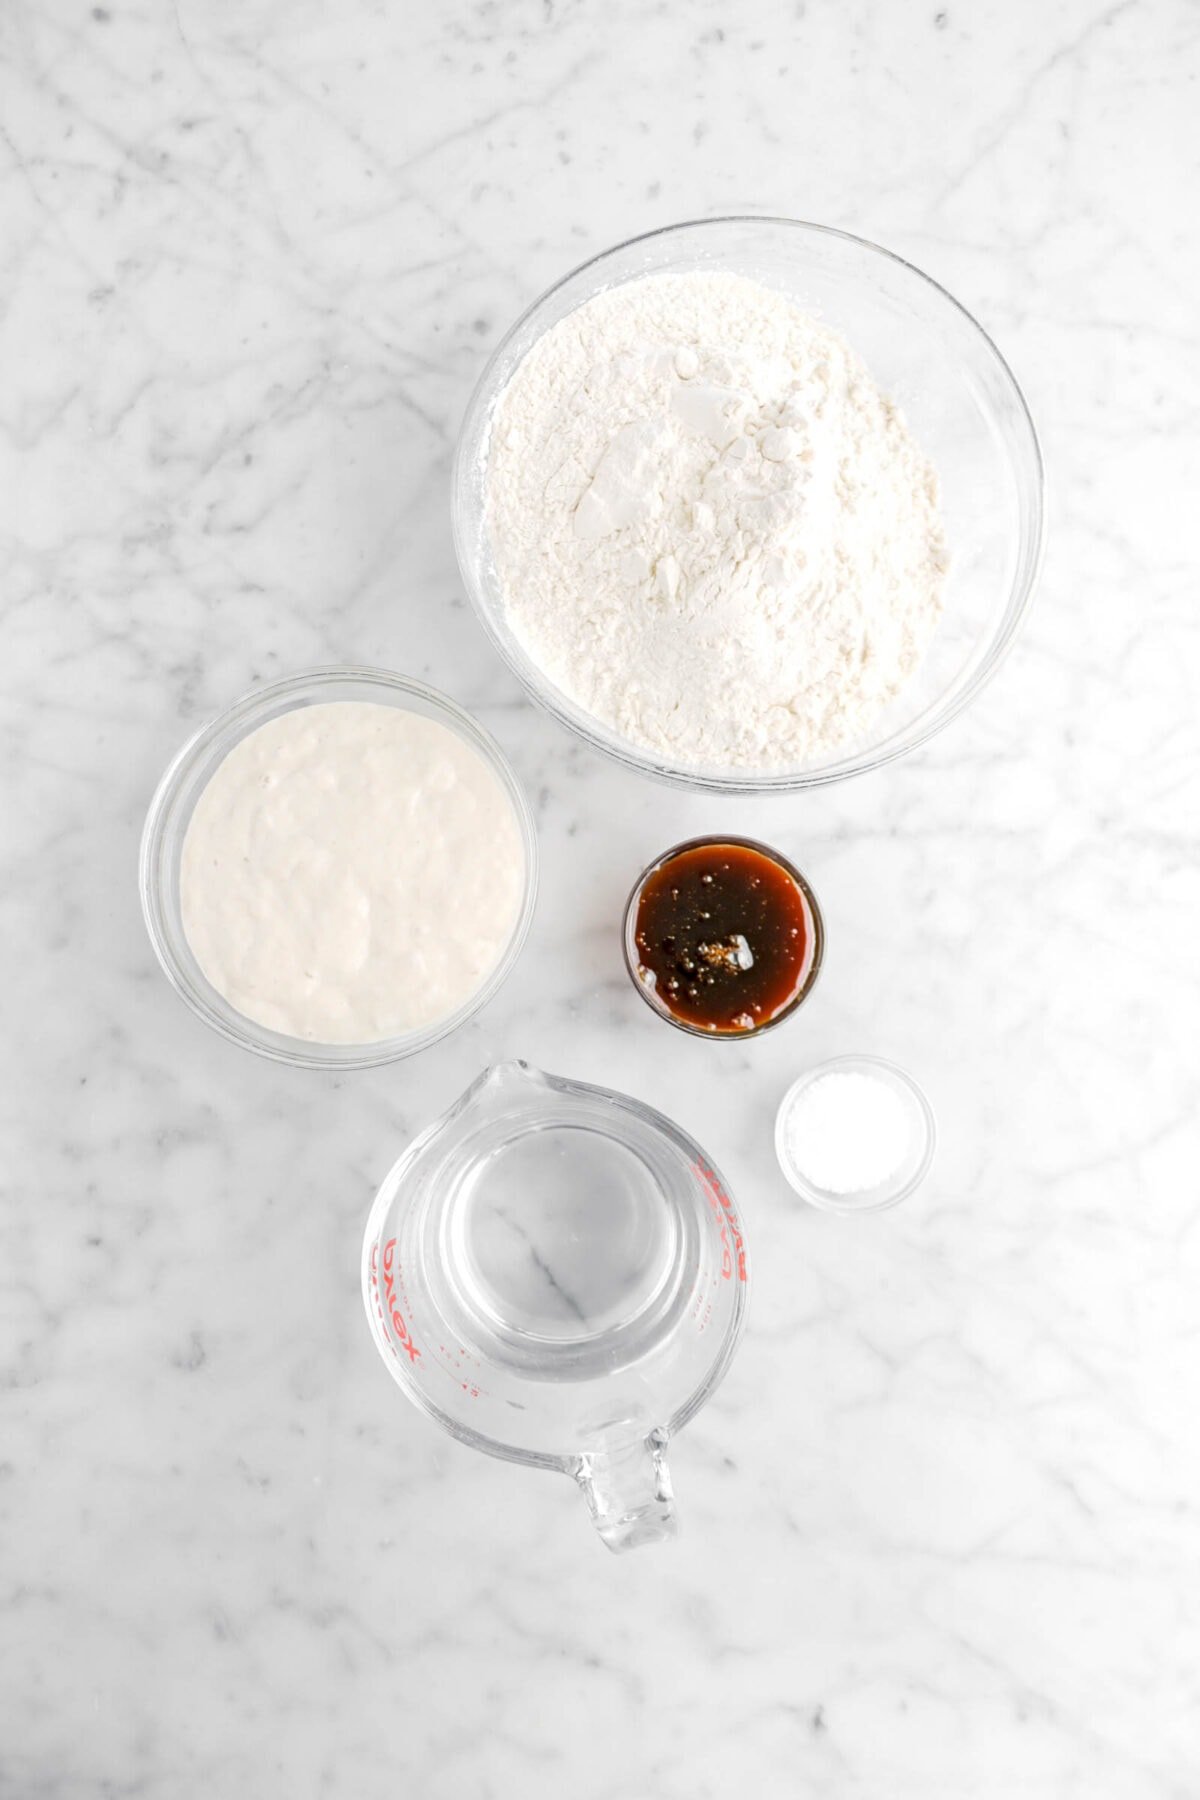 flour, sourdough starter, barley malt, salt, and water on marble counter